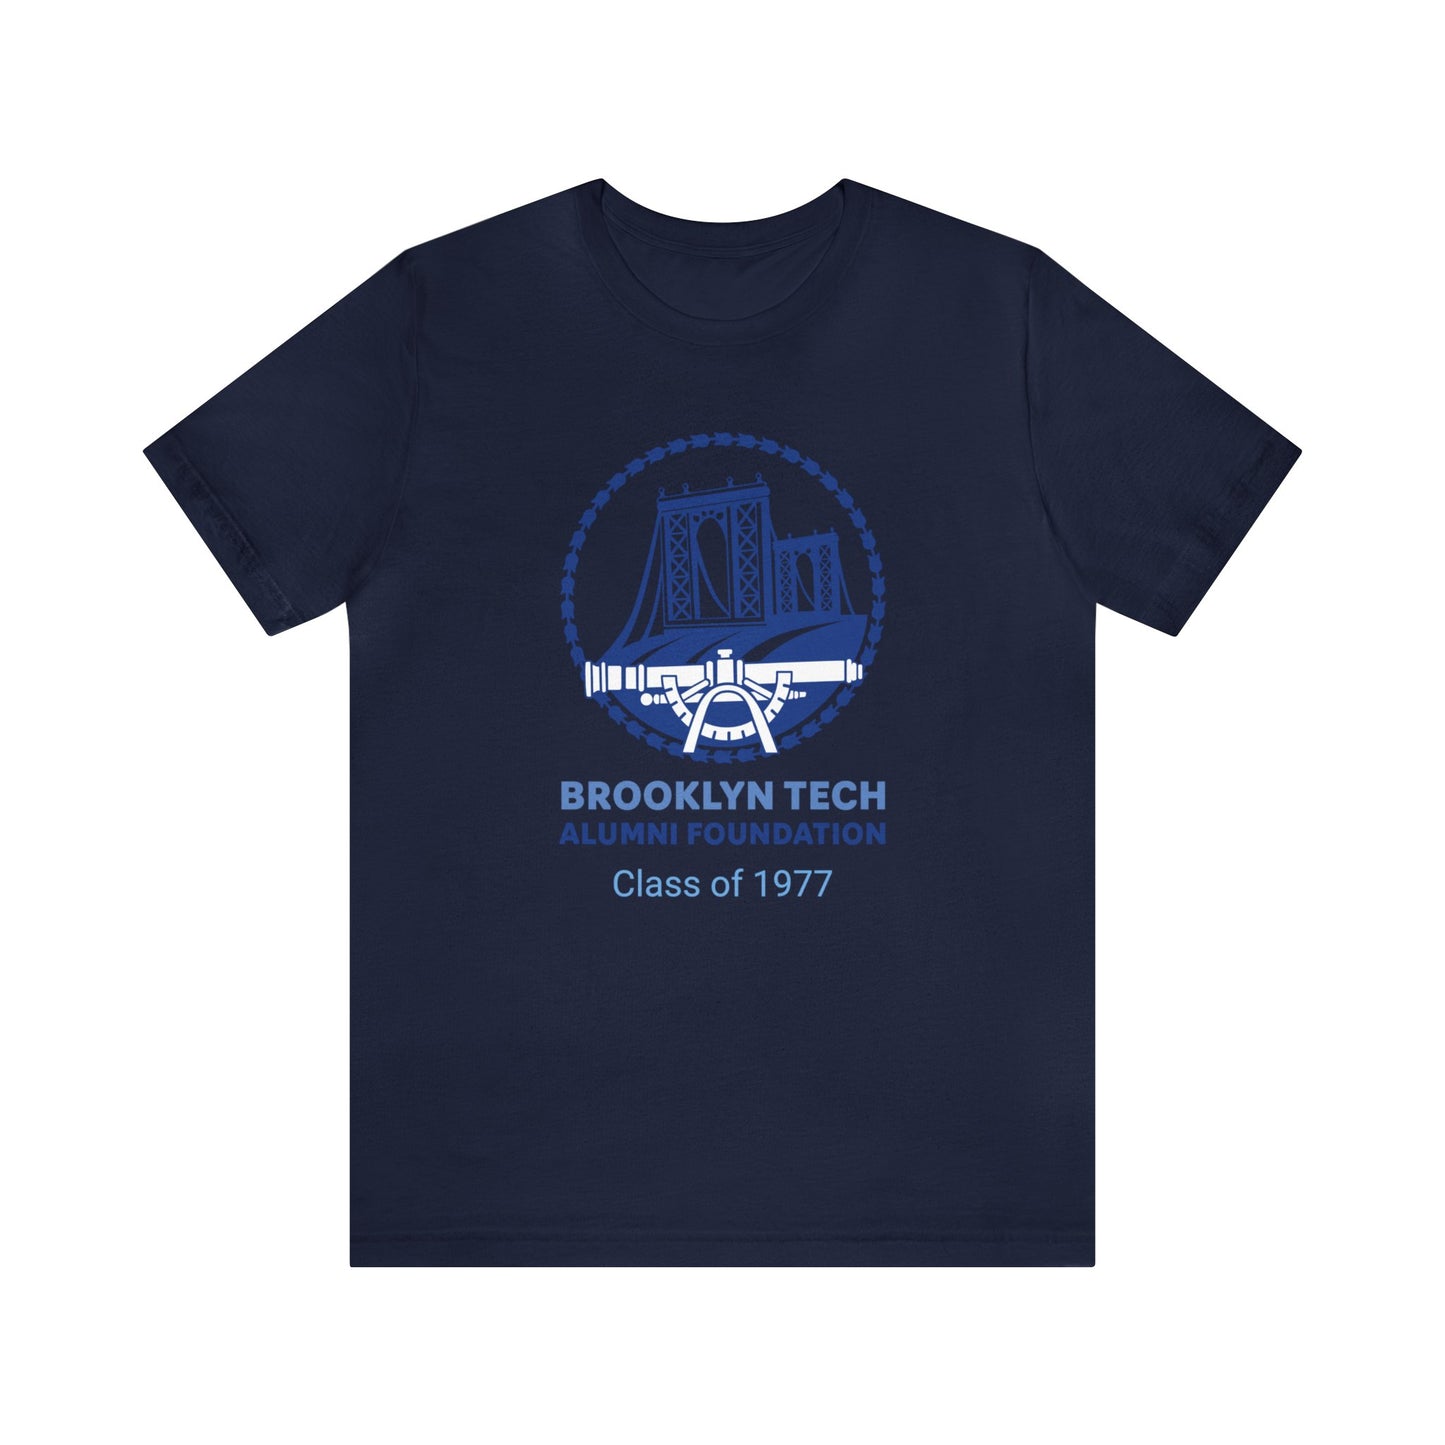 Alumni Foundation - Men's Short Sleeve Jersey - Class Of 1977